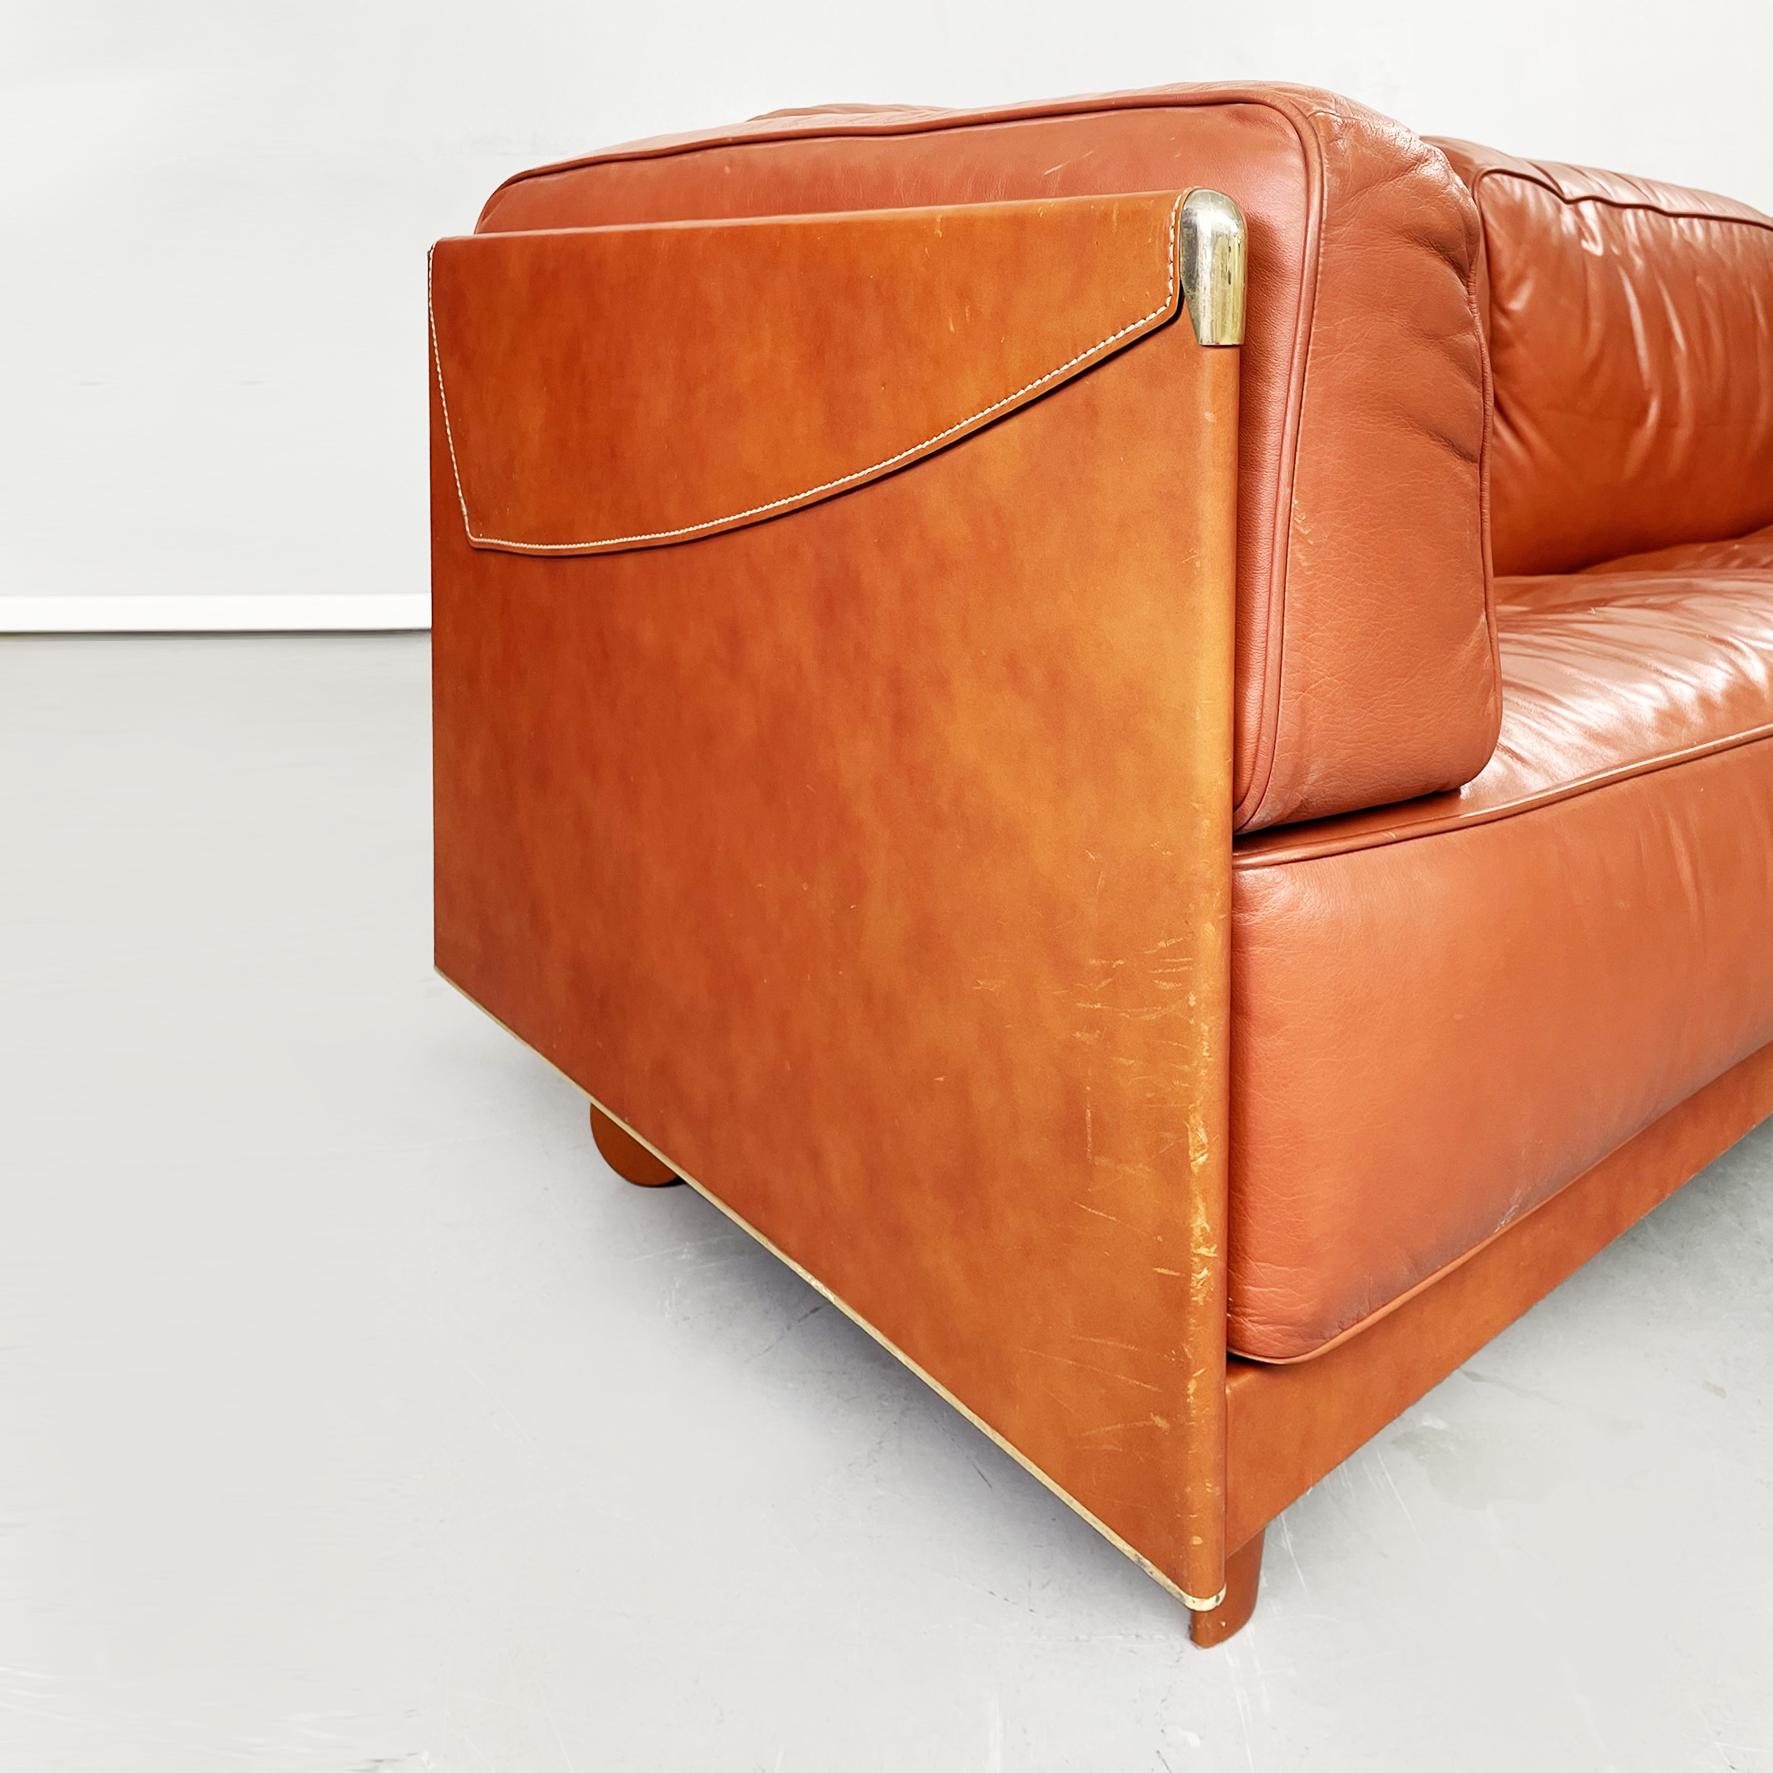 Italian Modern Brown Leather Sofa Twice by Cerri for Poltrona Frau, 1980s For Sale 6